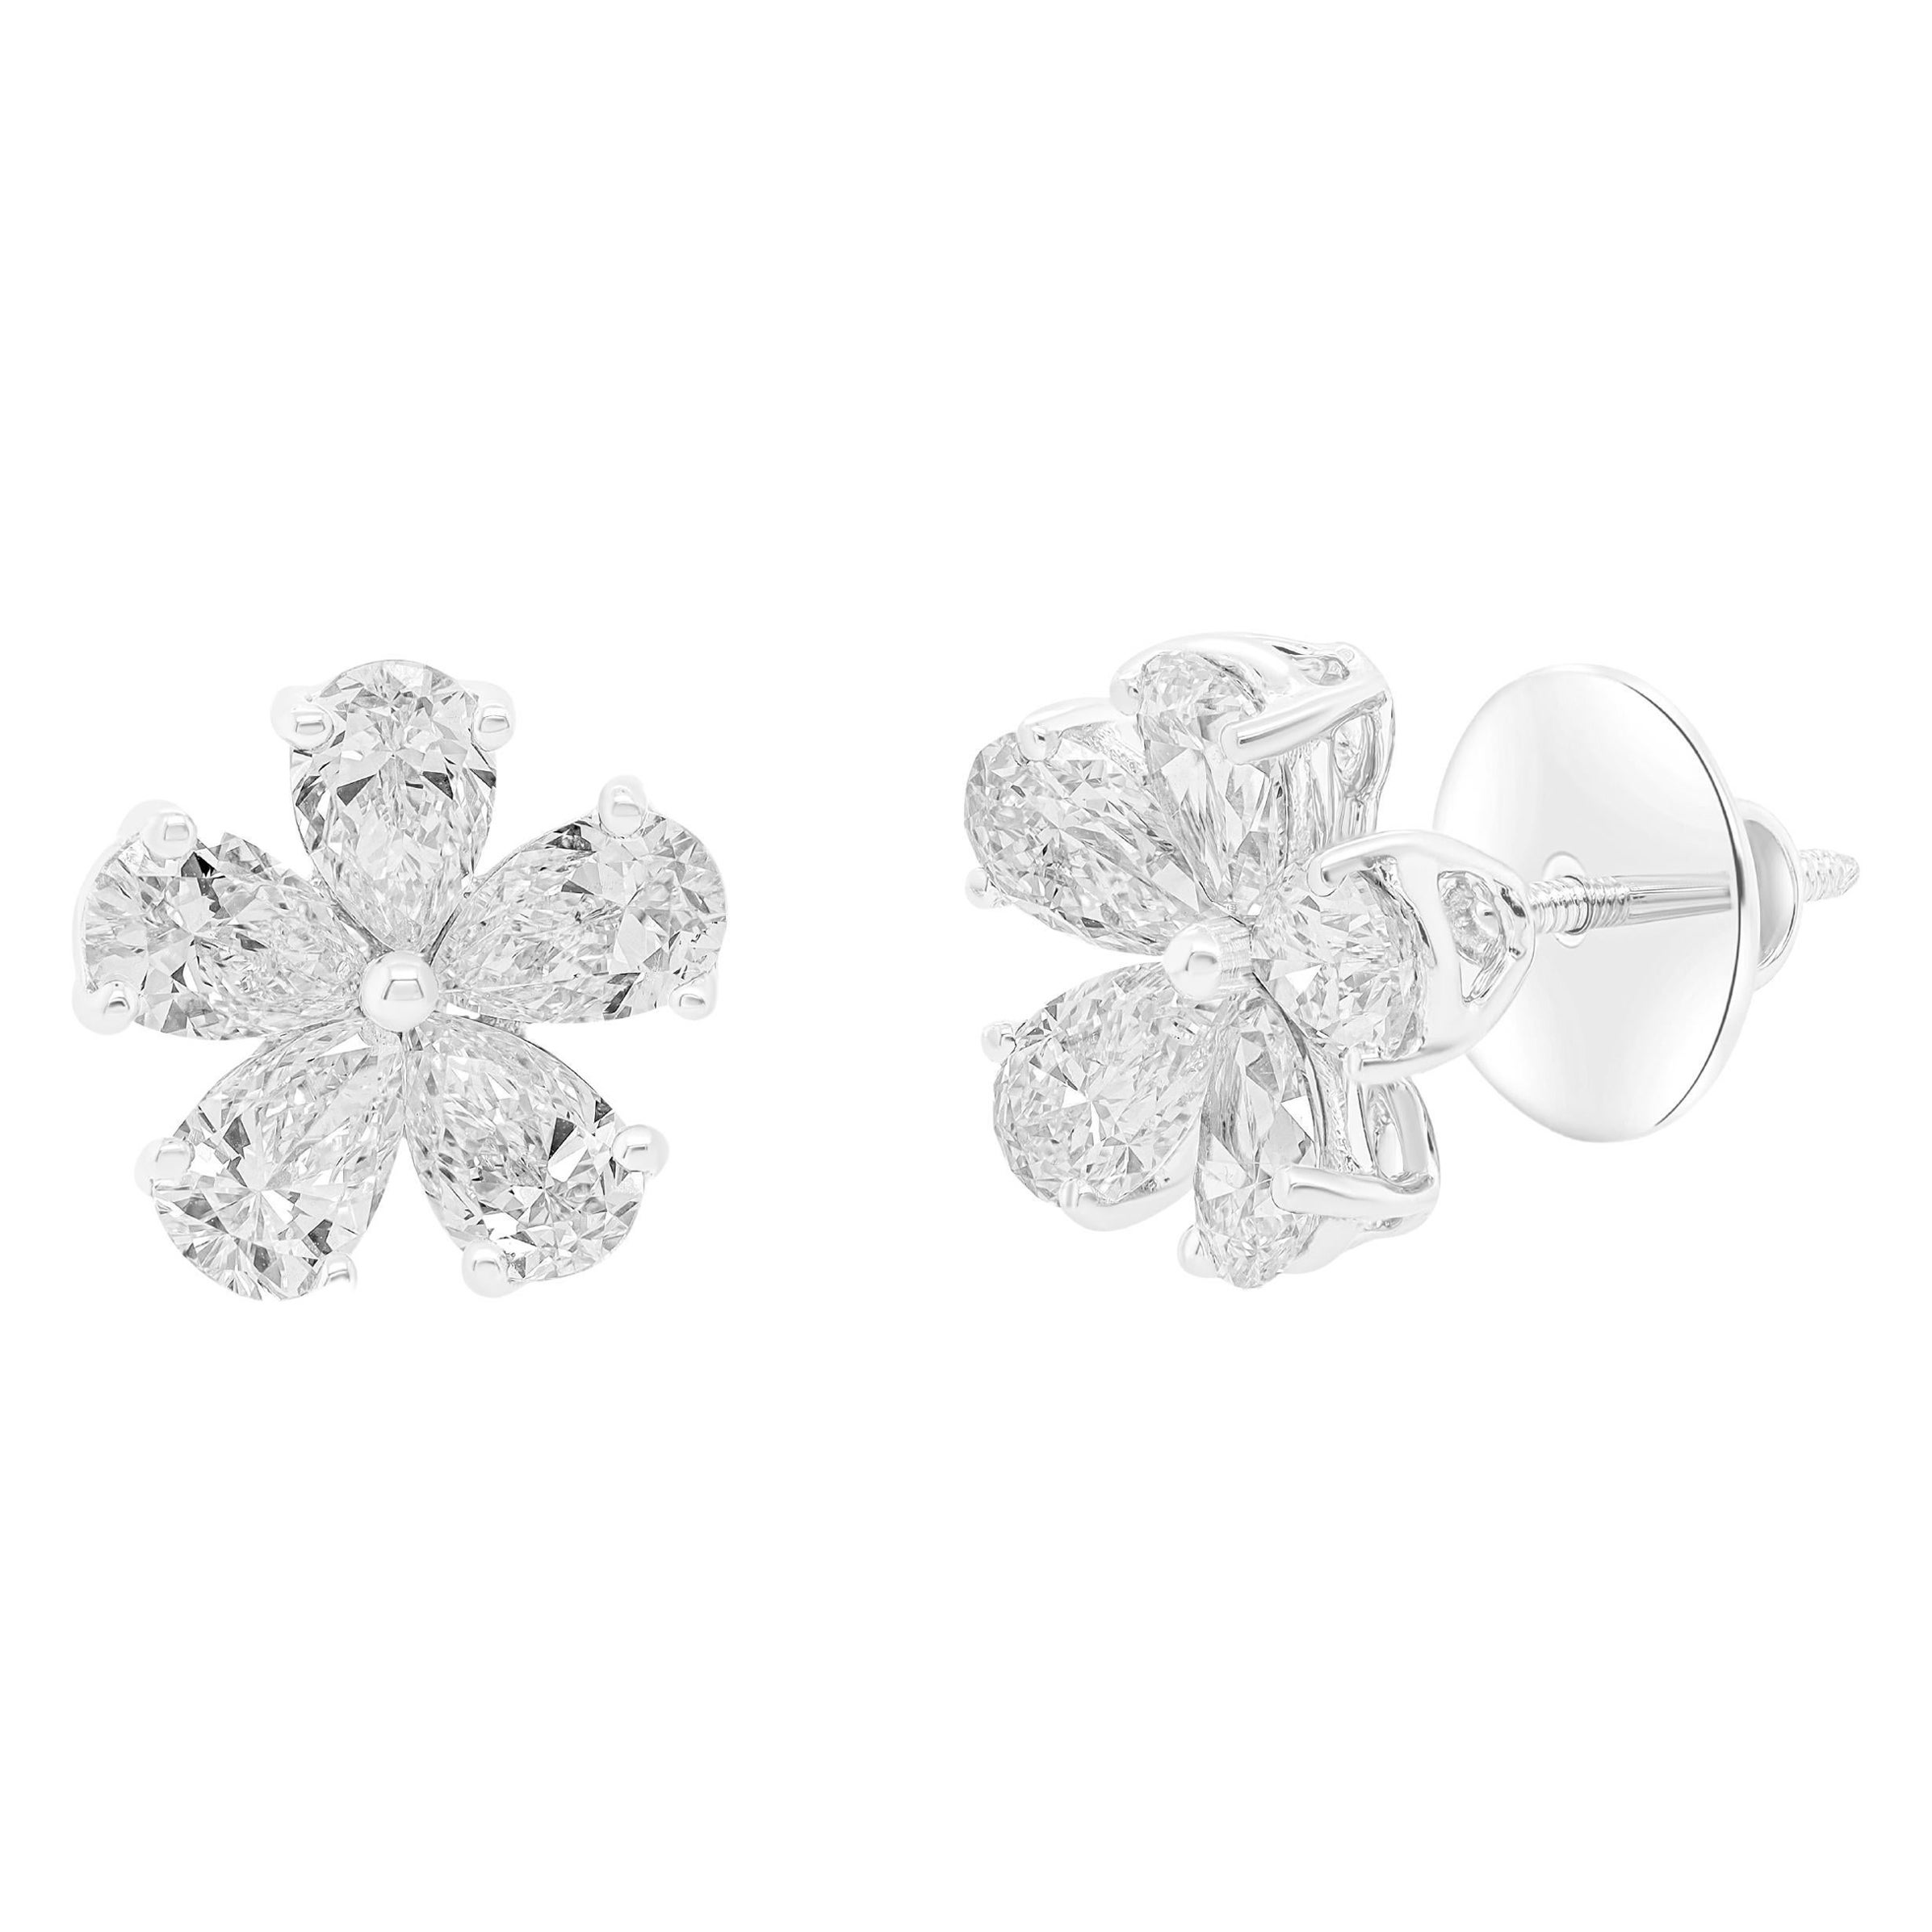 Diana M. 6.05 Carat Flower Cluster Diamond Earrings